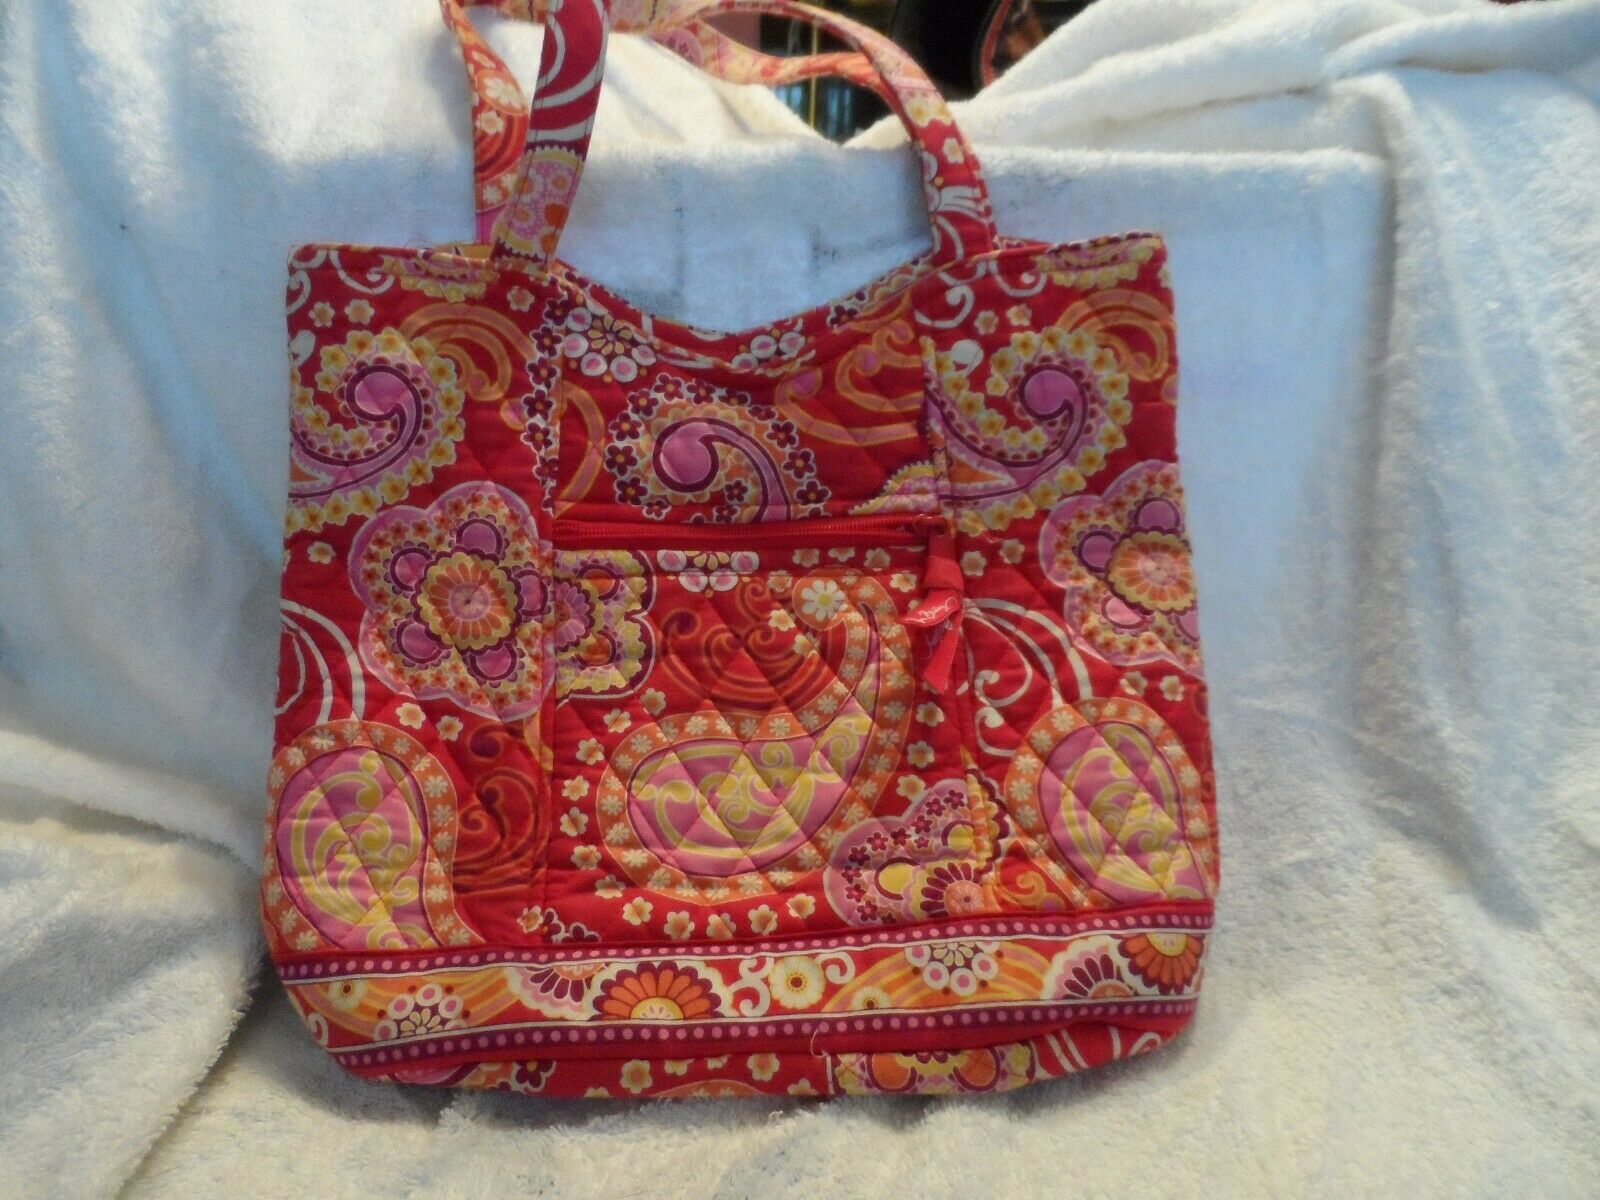 Vera Bradley Raspberry Fizz bucket tote handbag - Women's Bags & Handbags